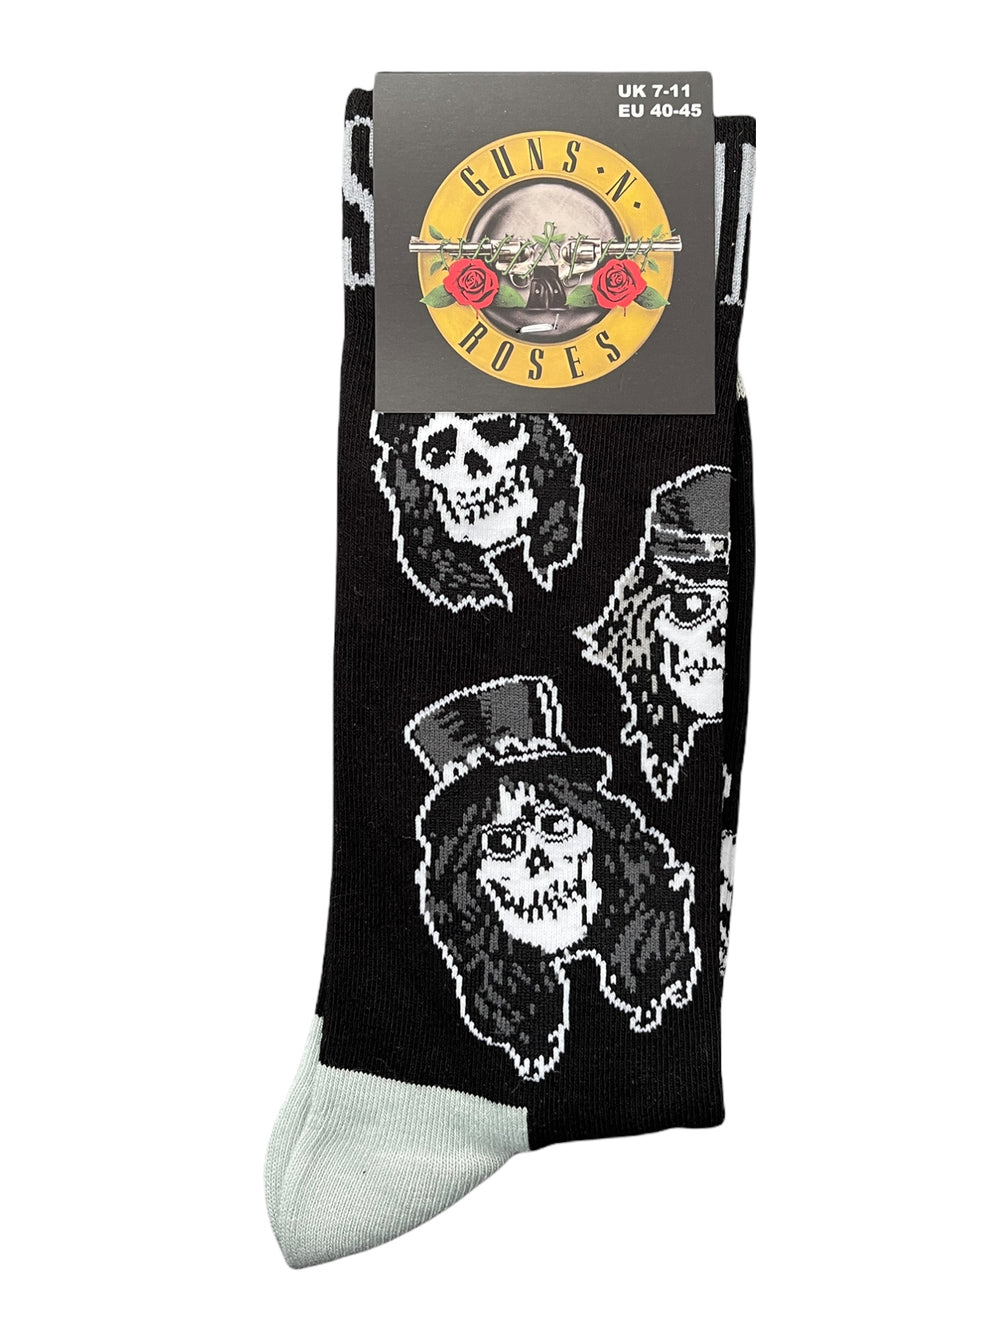 Guns N' Roses - SKULLS MONO Official Product 1 Pair Jacquard Socks Brand New